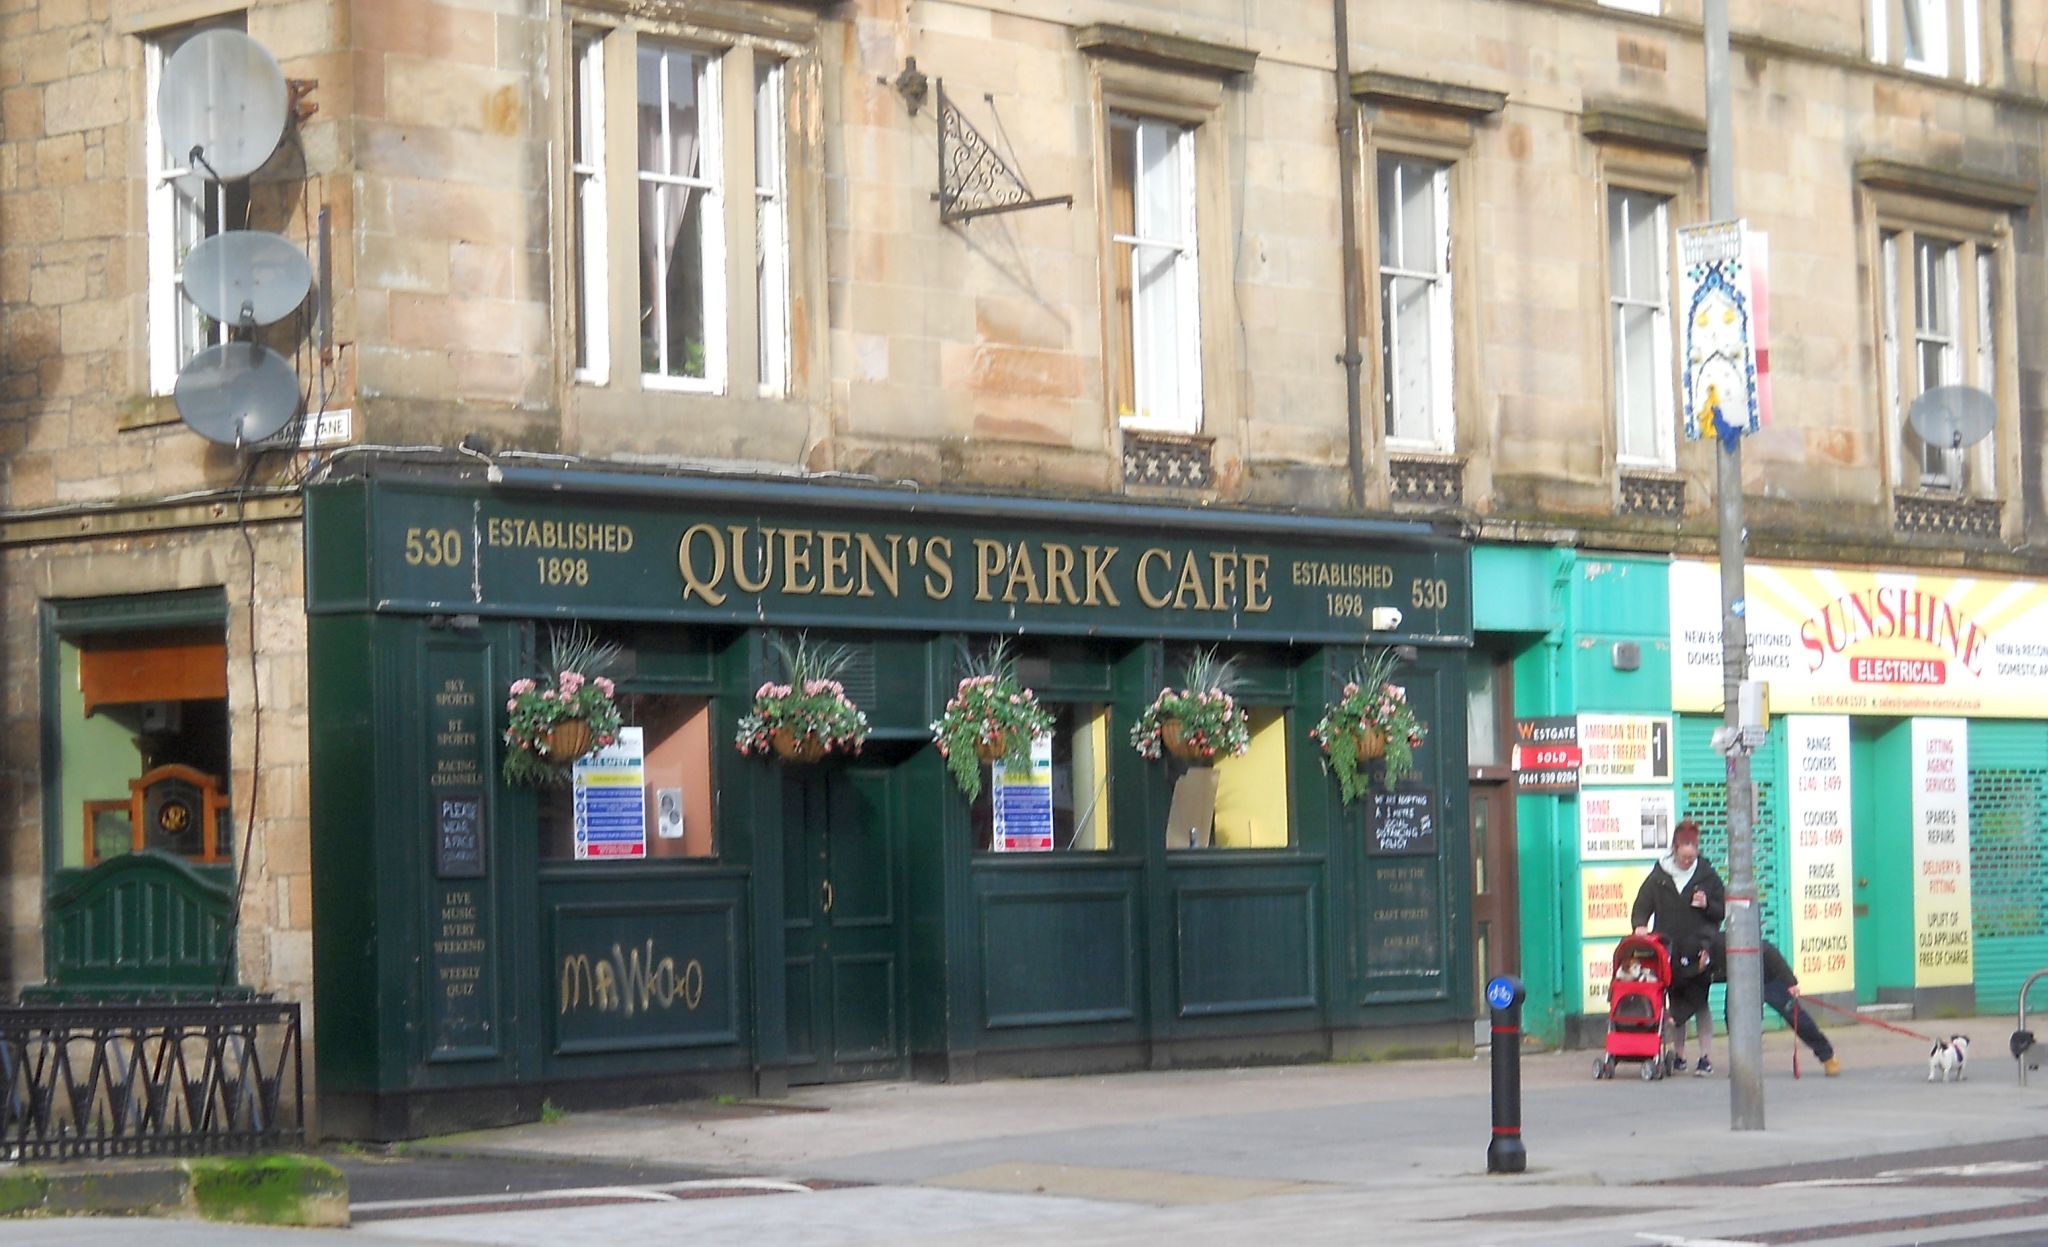 Queen's Park Cafe in Victoria Road